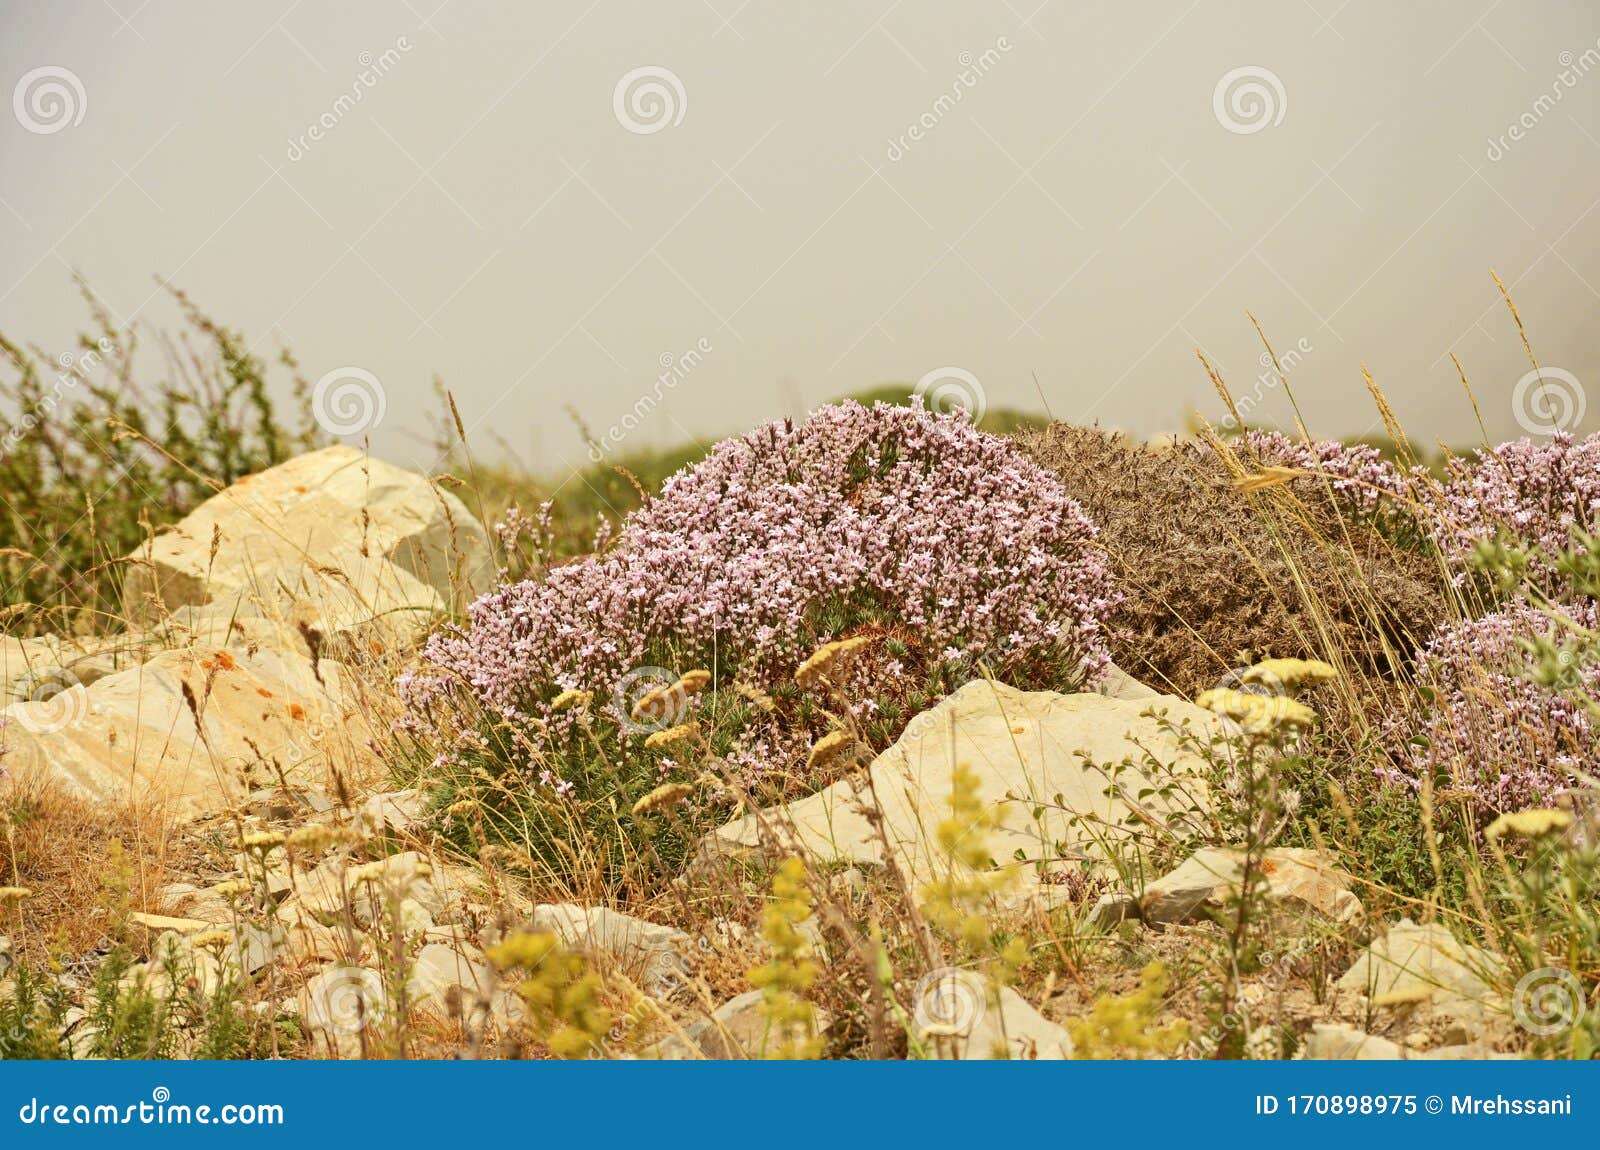 vegetation in alborz mountains , iran